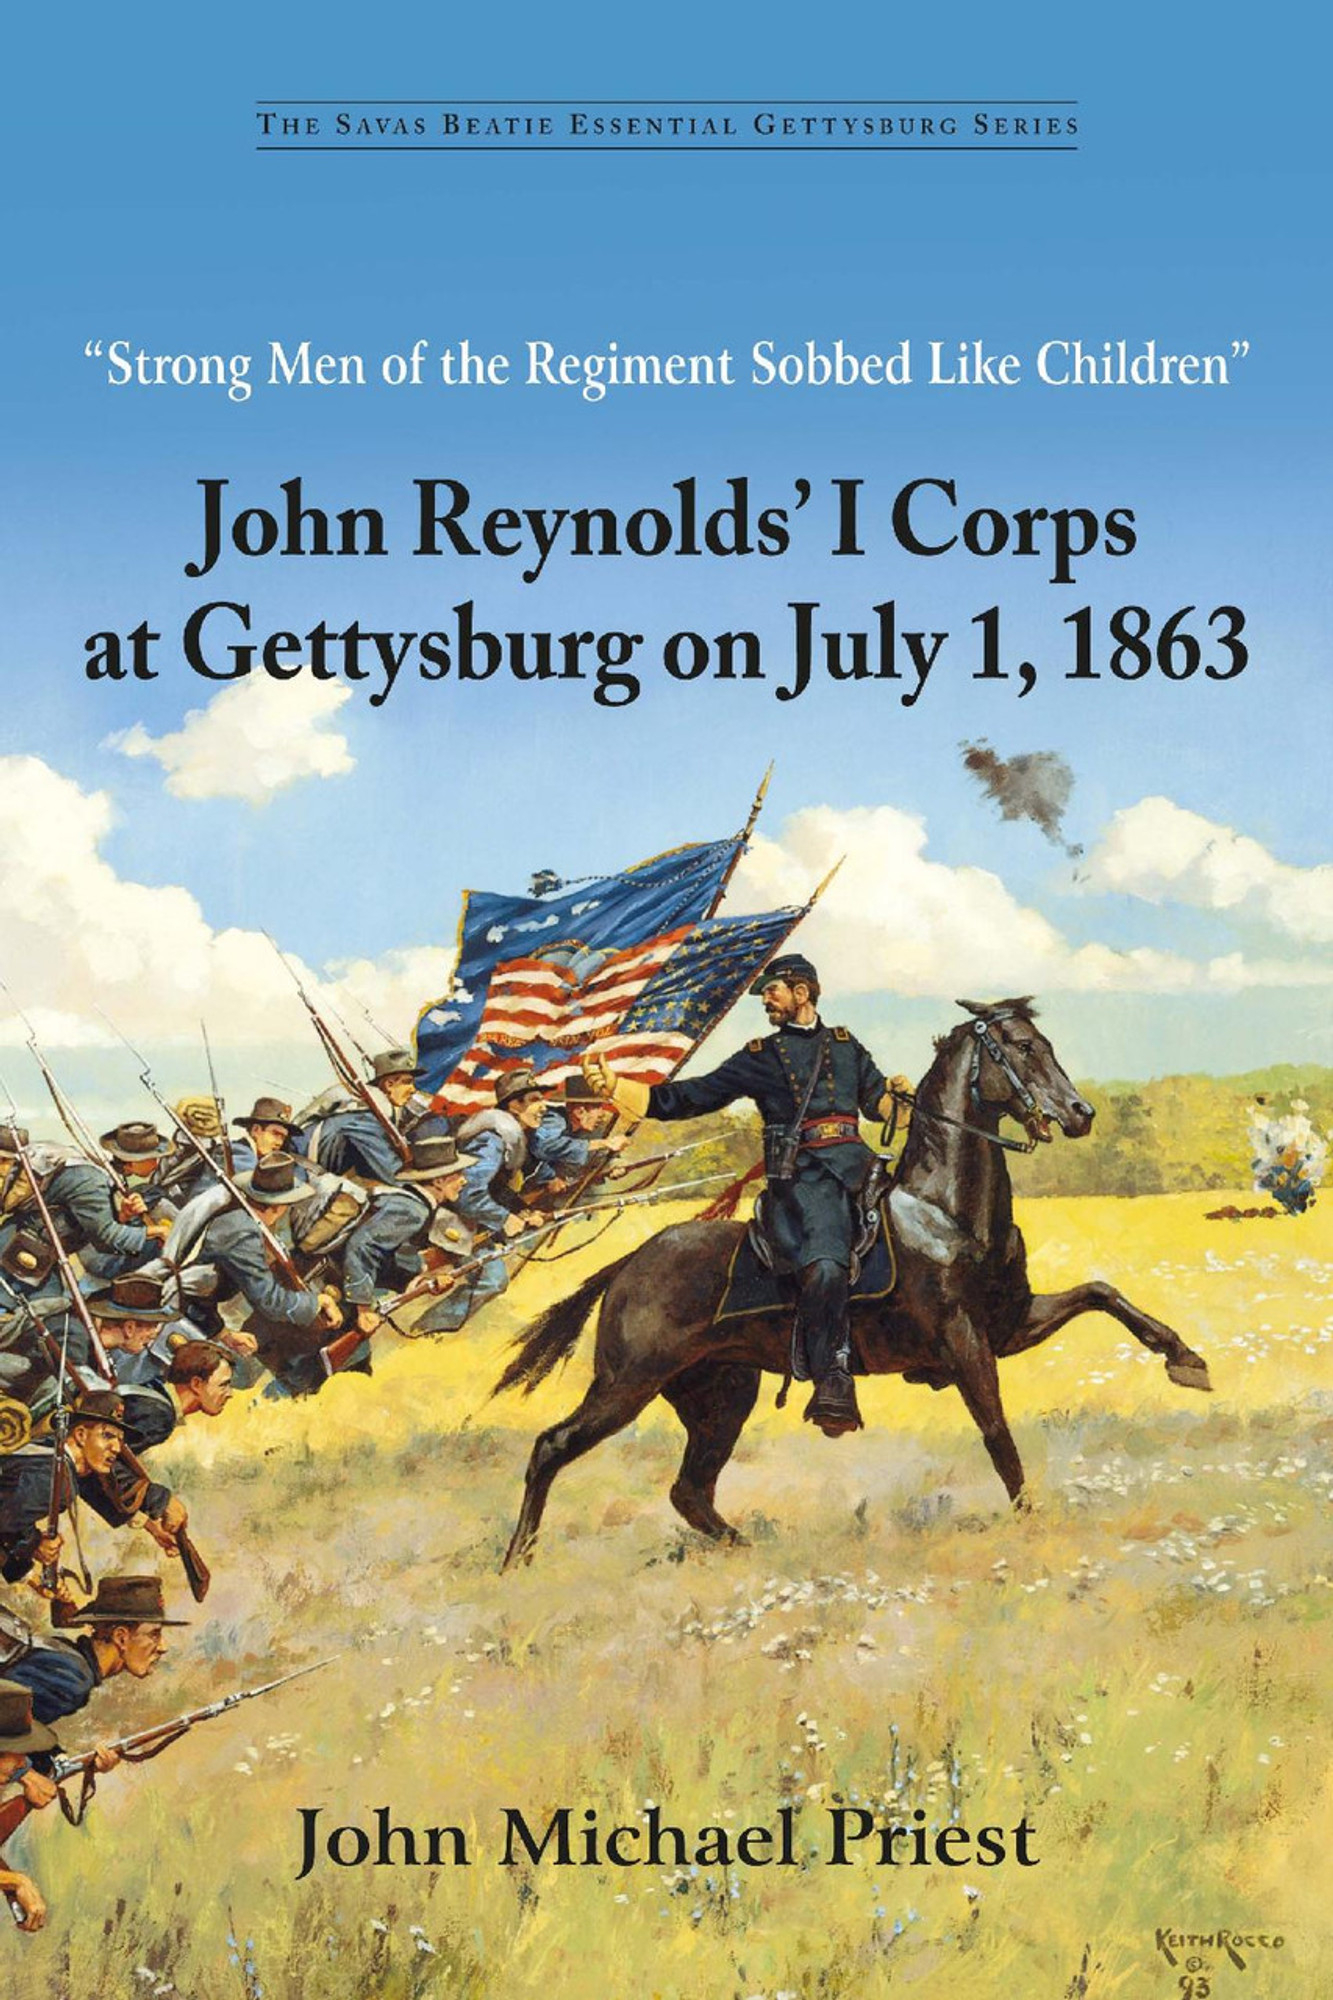 “STRONG MEN OF THE REGIMENT SOBBED LIKE CHILDREN”: JOHN REYNOLDS’ I CORPS AT GETTYSBURG ON JULY 1, 1863